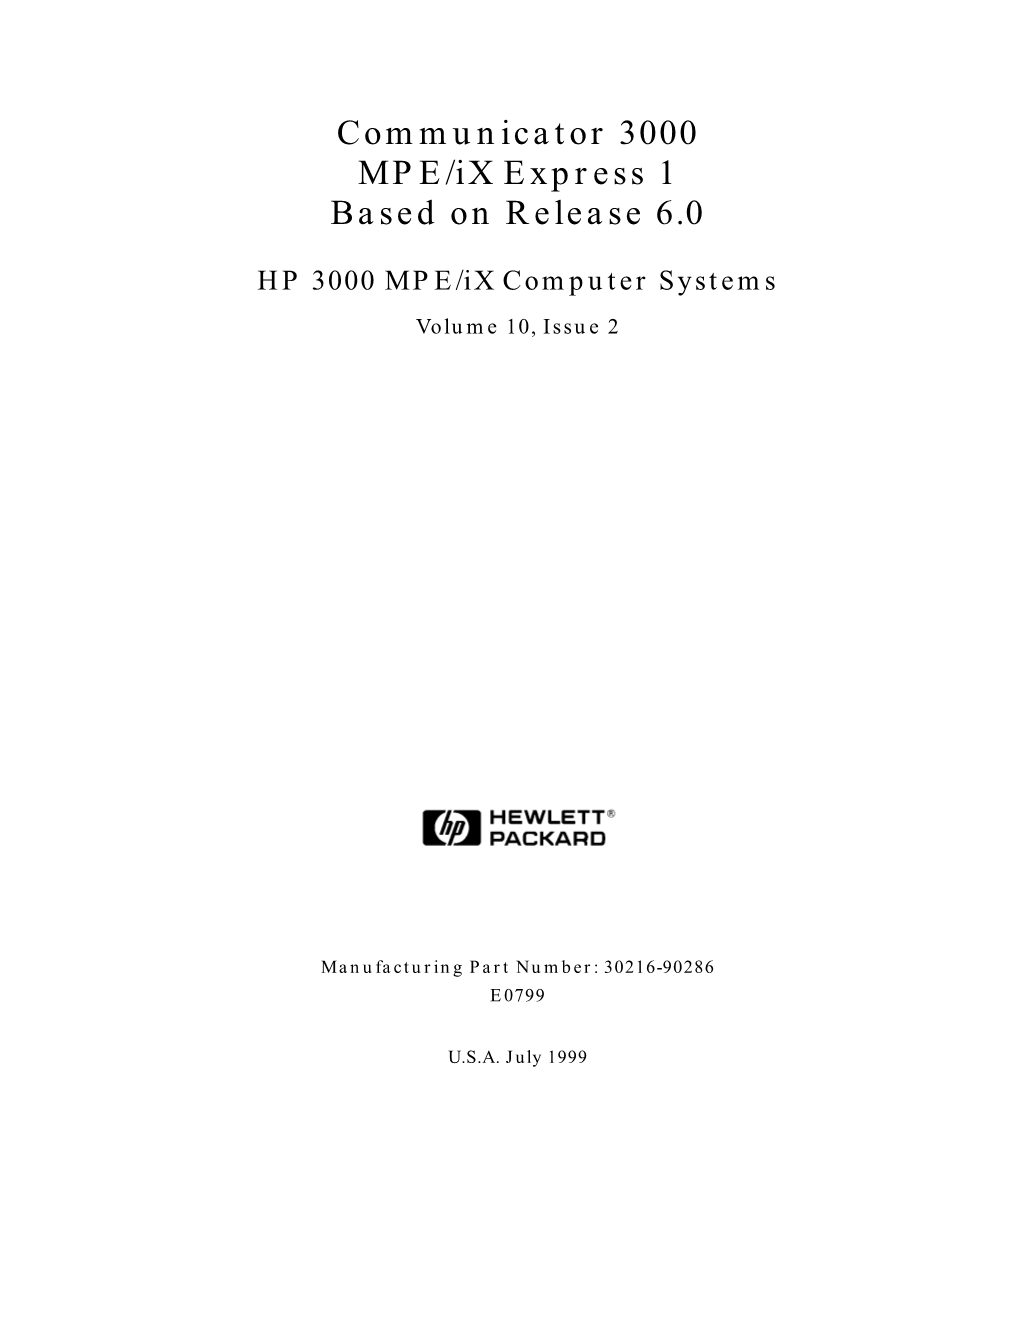 Communicator 3000 MPE/Ix Express 1 Based on Release 6.0